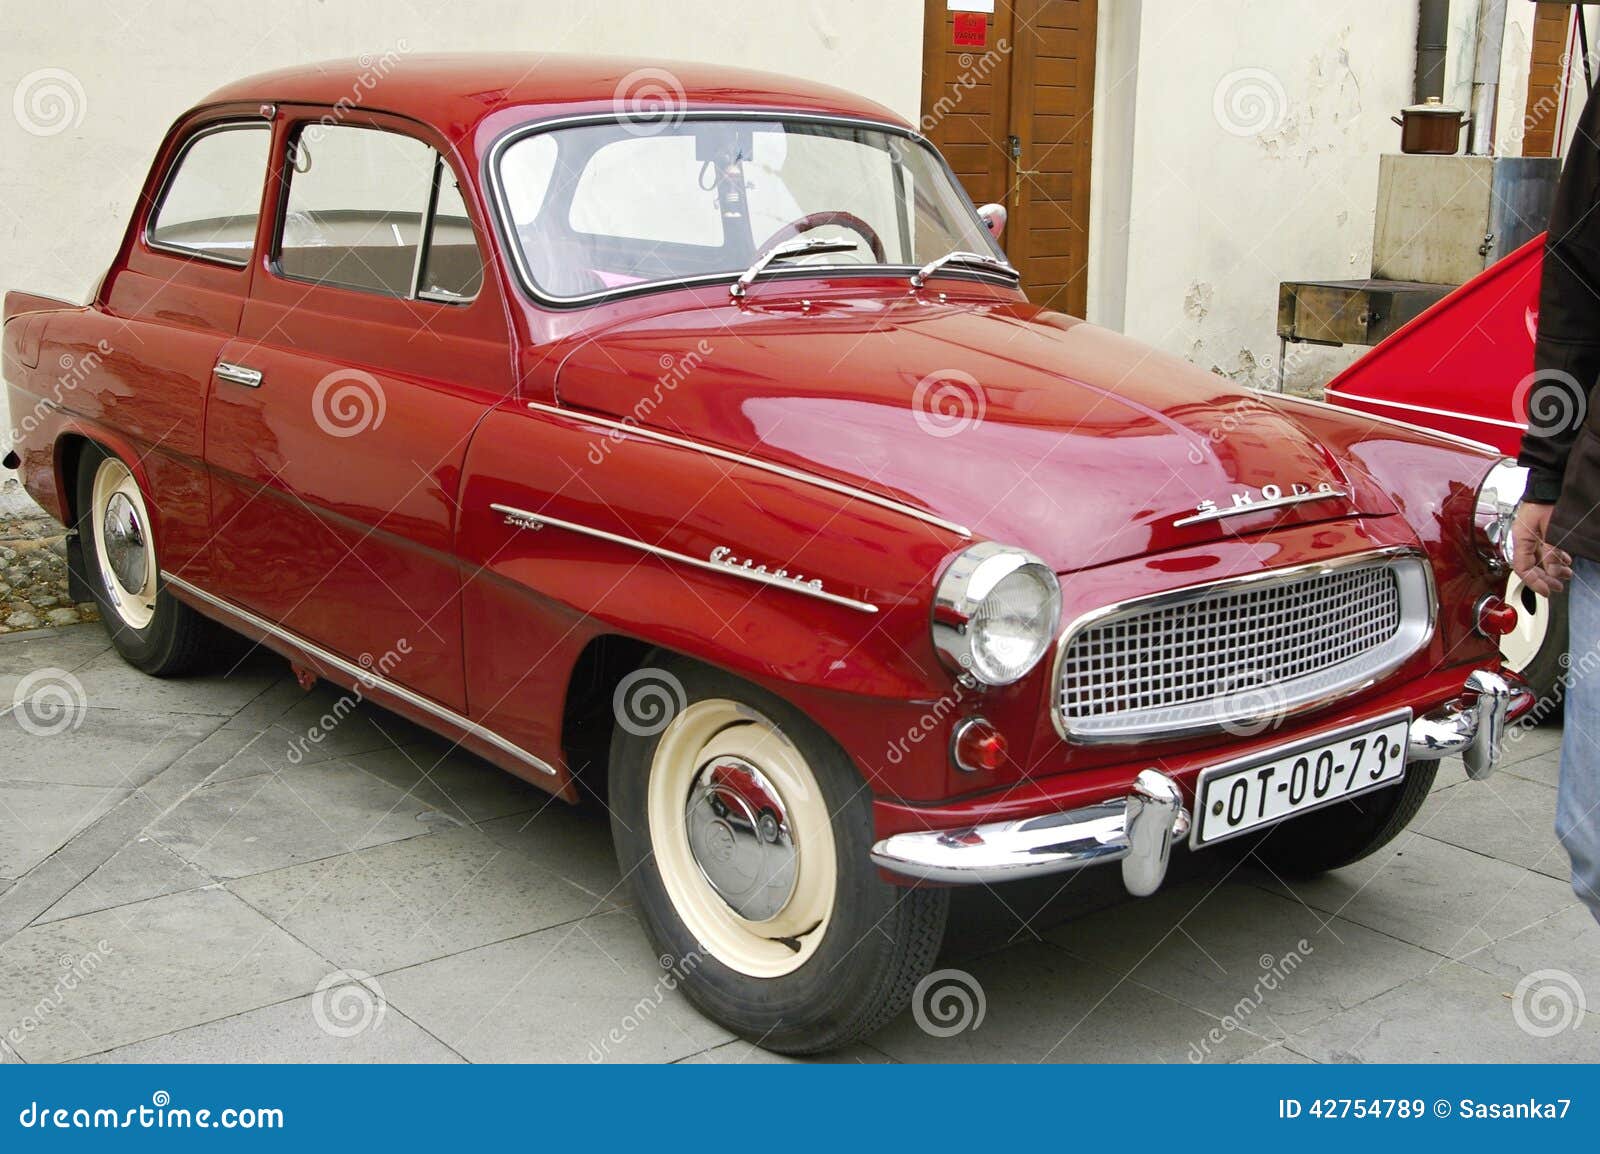 Old car red SKODA editorial stock image. Image of meeting - 42754789